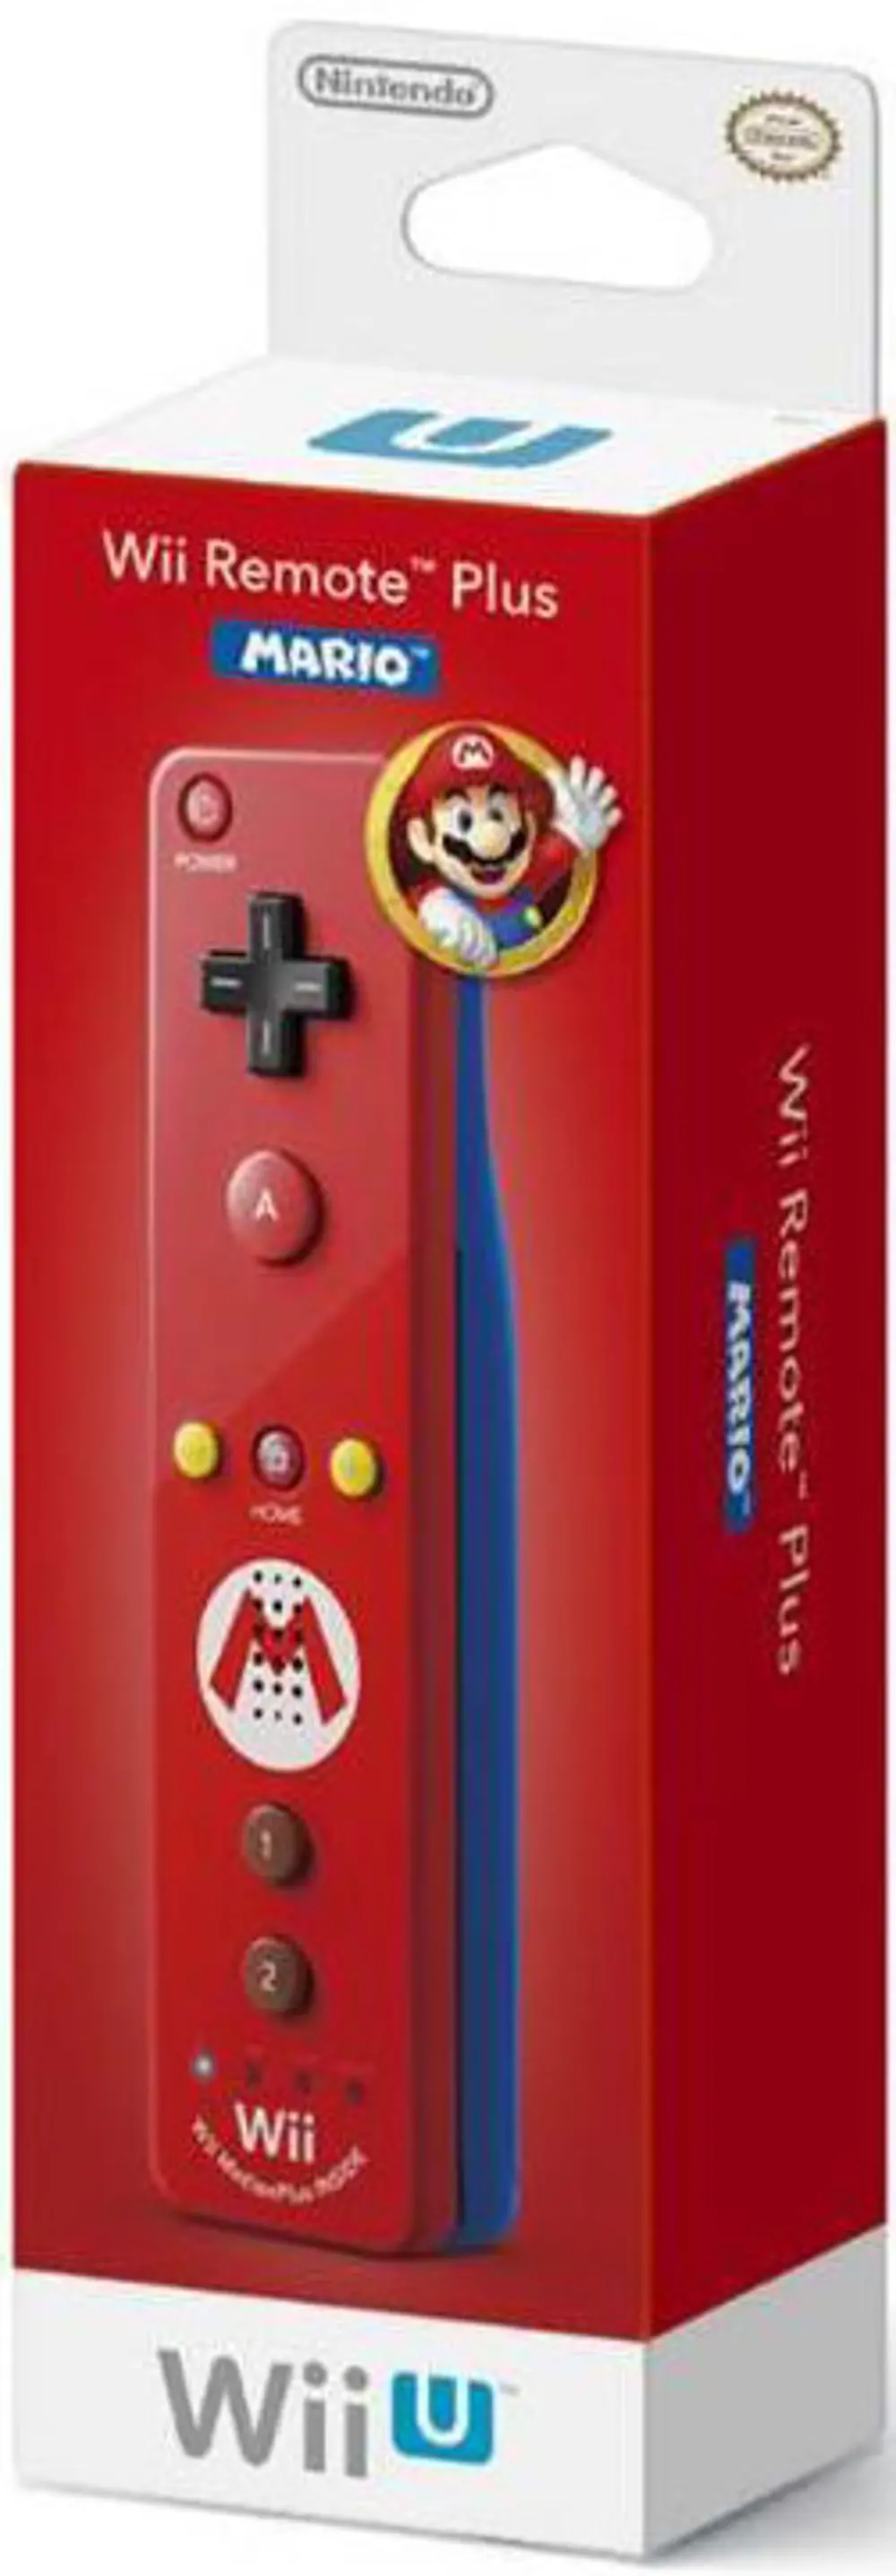 WIIUREMOTE Mario Red Remote Plus Controller - Nintendo Wii U-1